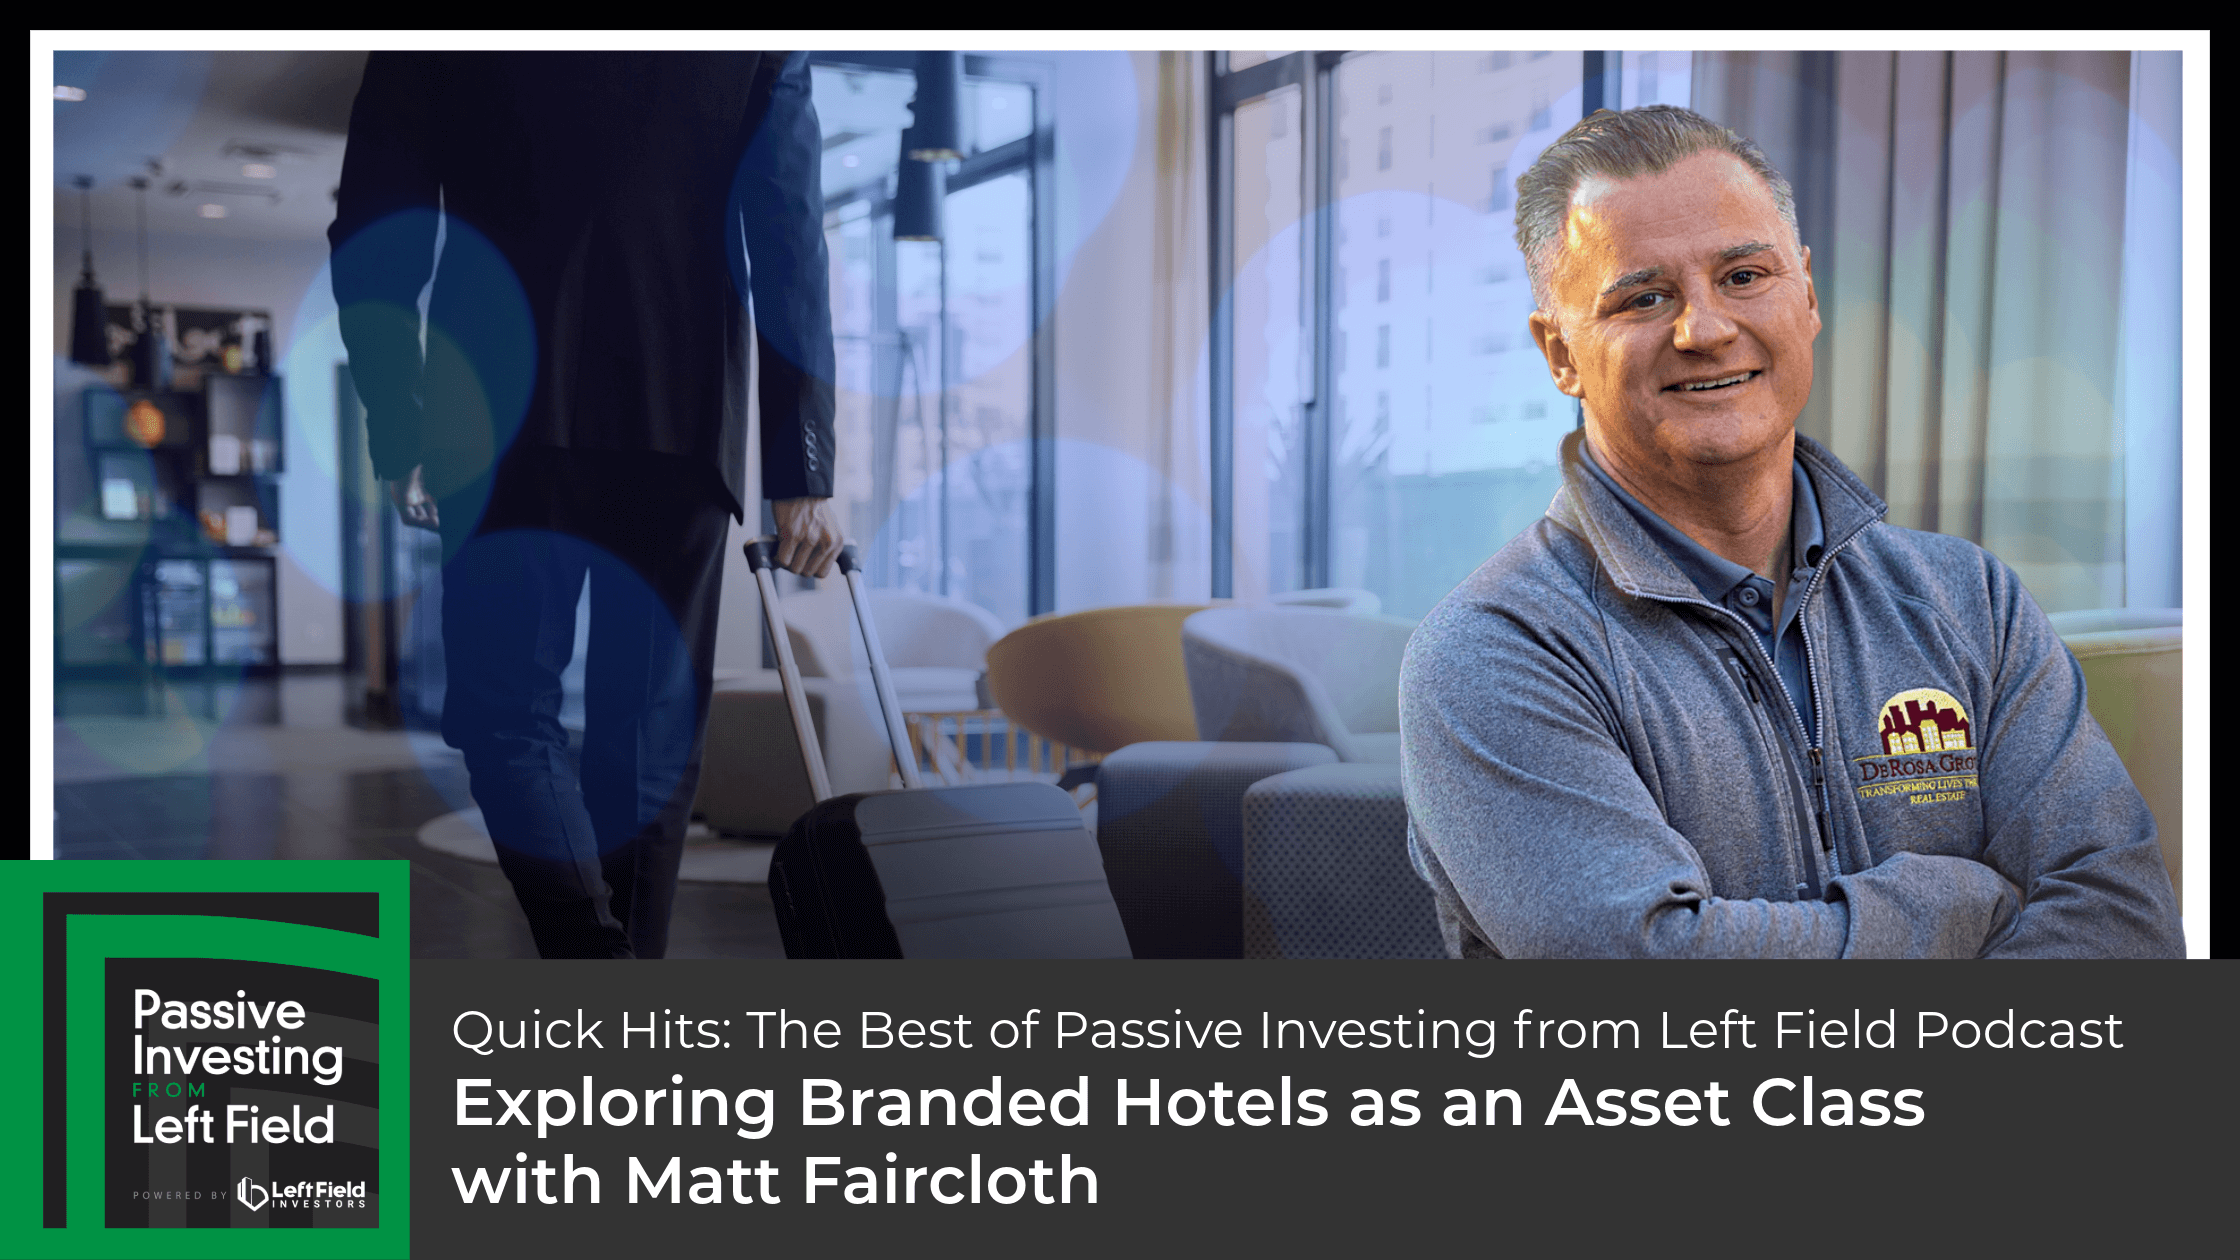 Matt Faircloth in front of an image of a man wheeling a suitcase through a hotel lobby